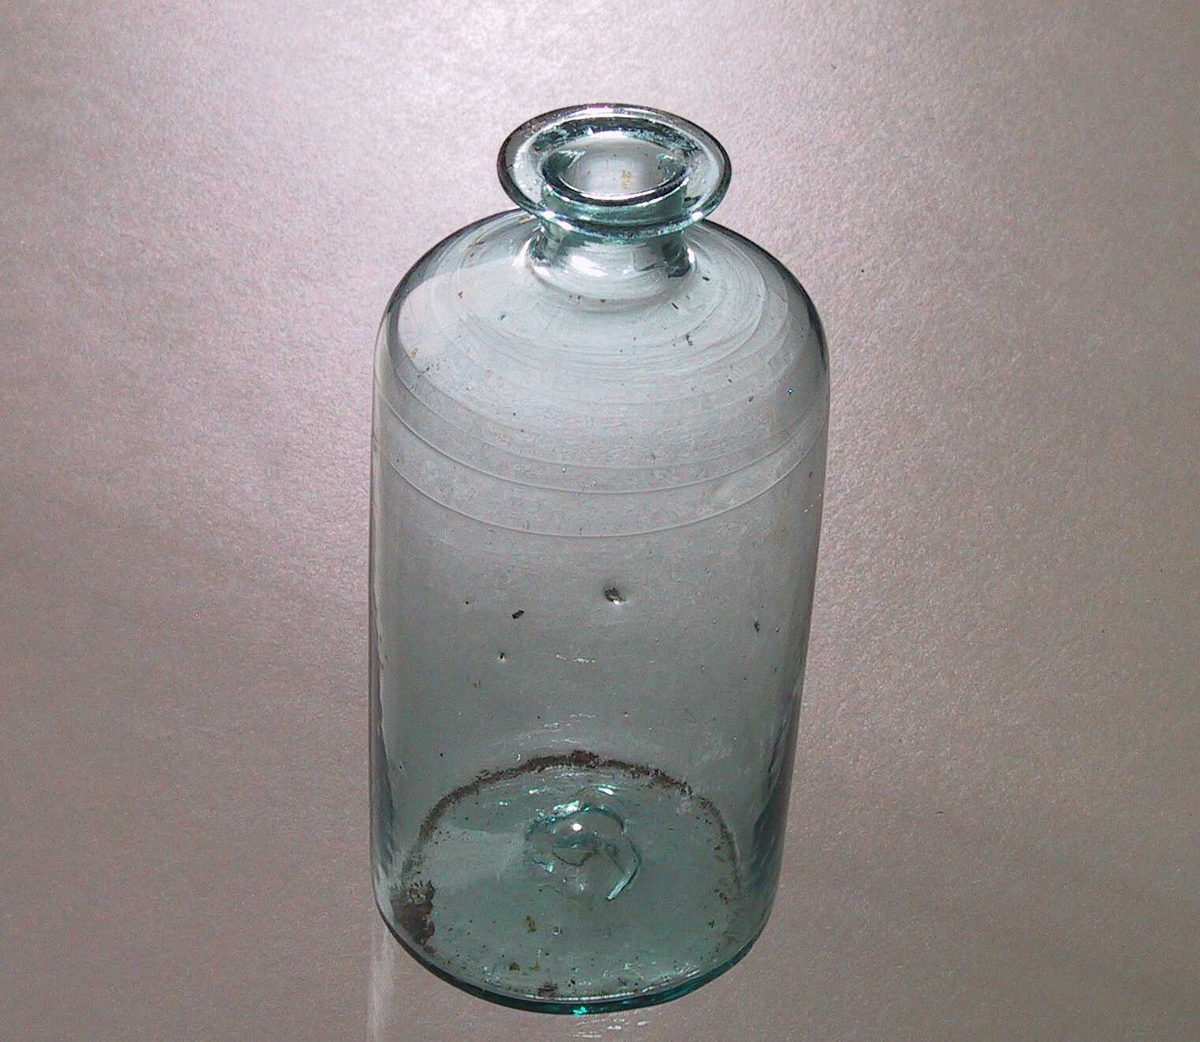 Flaske til medisin. Glass, grønnblått. Sylinderformet flaske med skrå skuldre, kort hals, utbrettet  munningsrand.  Kork mangler.